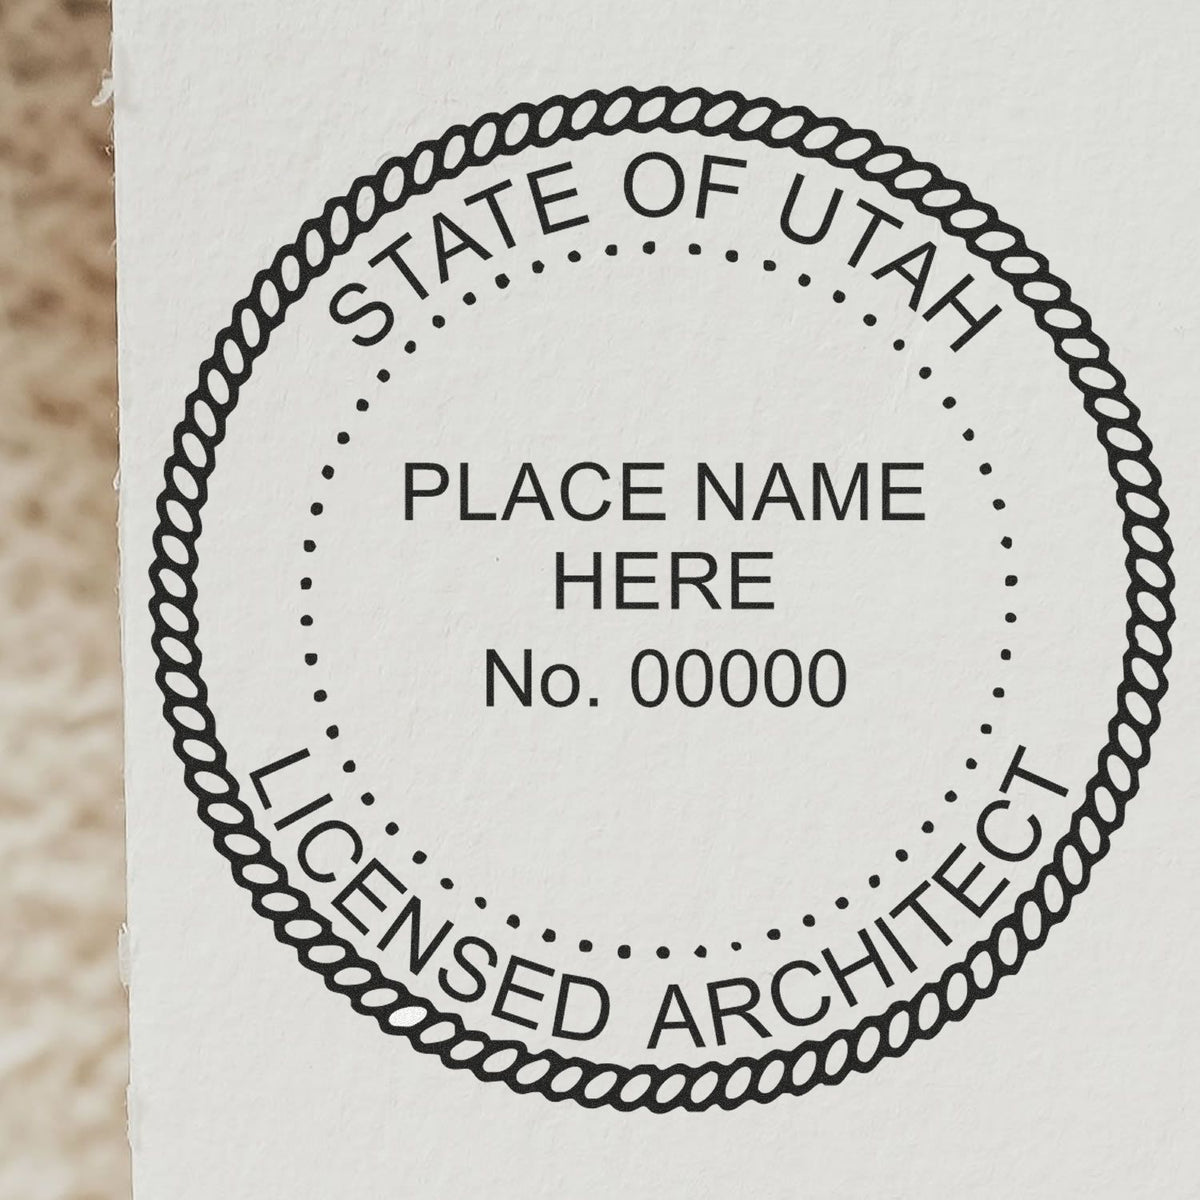 Utah Architect Seal Stamp Lifestyle Photo